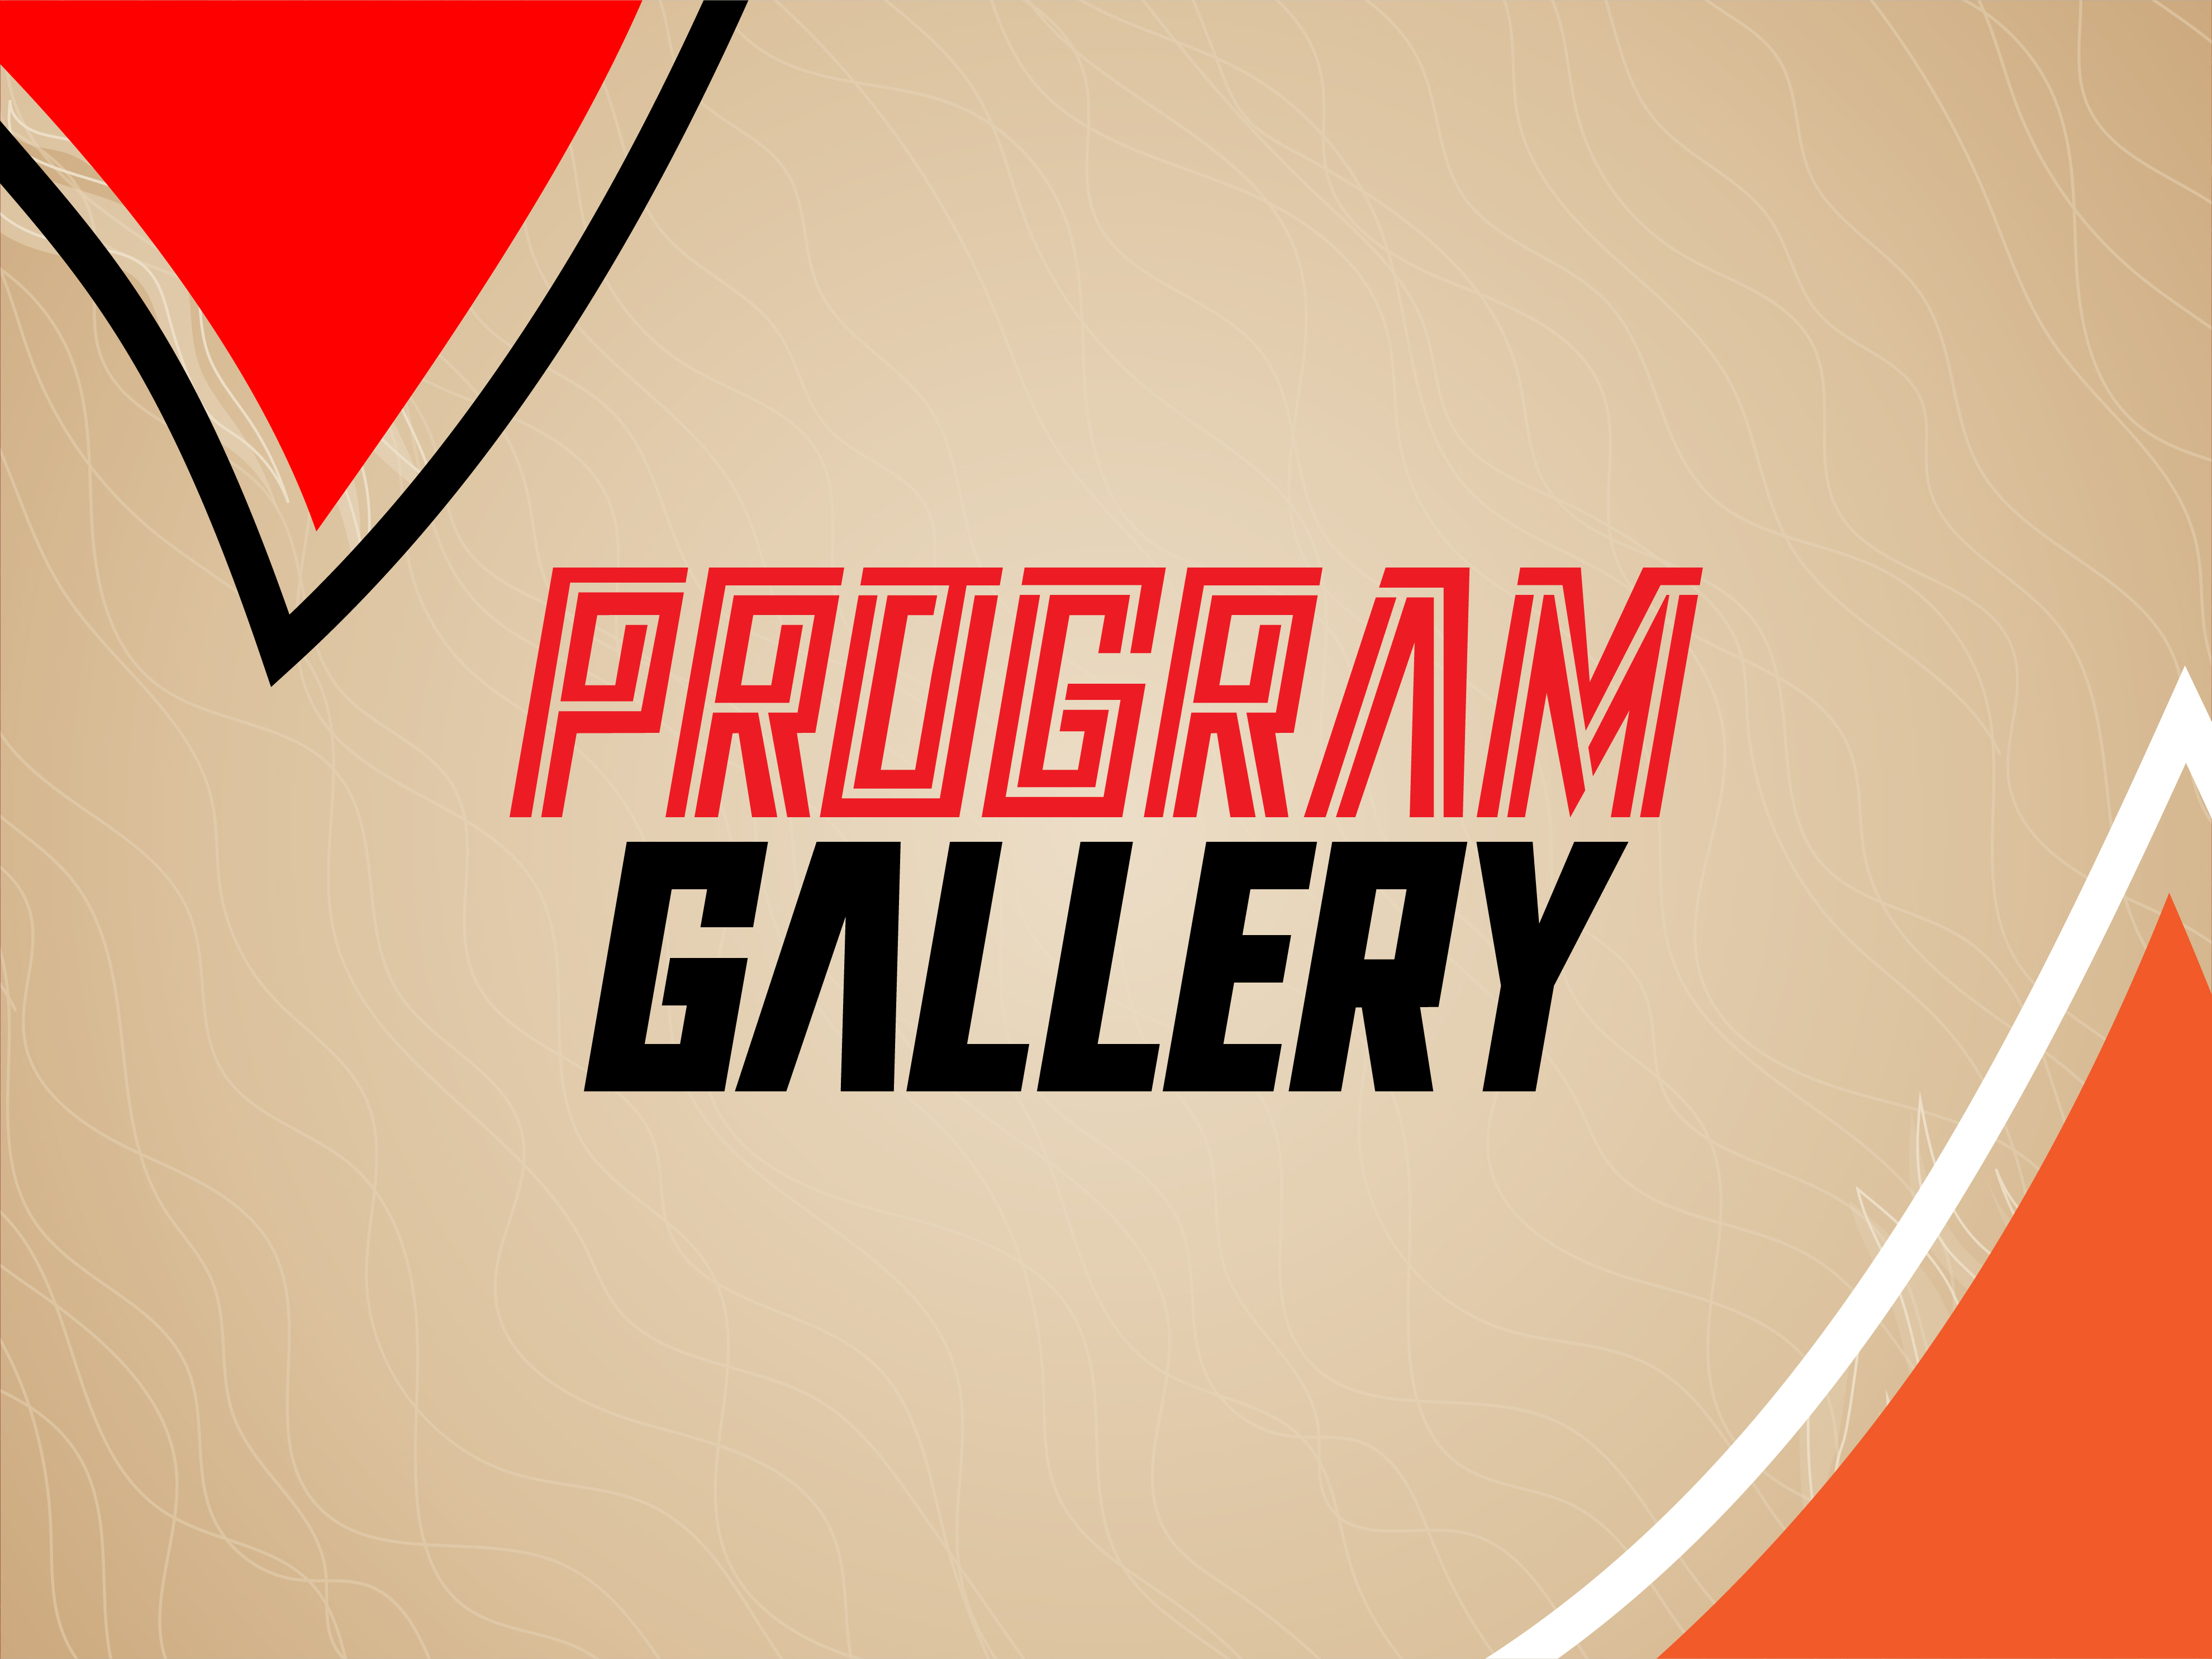 Program Gallery